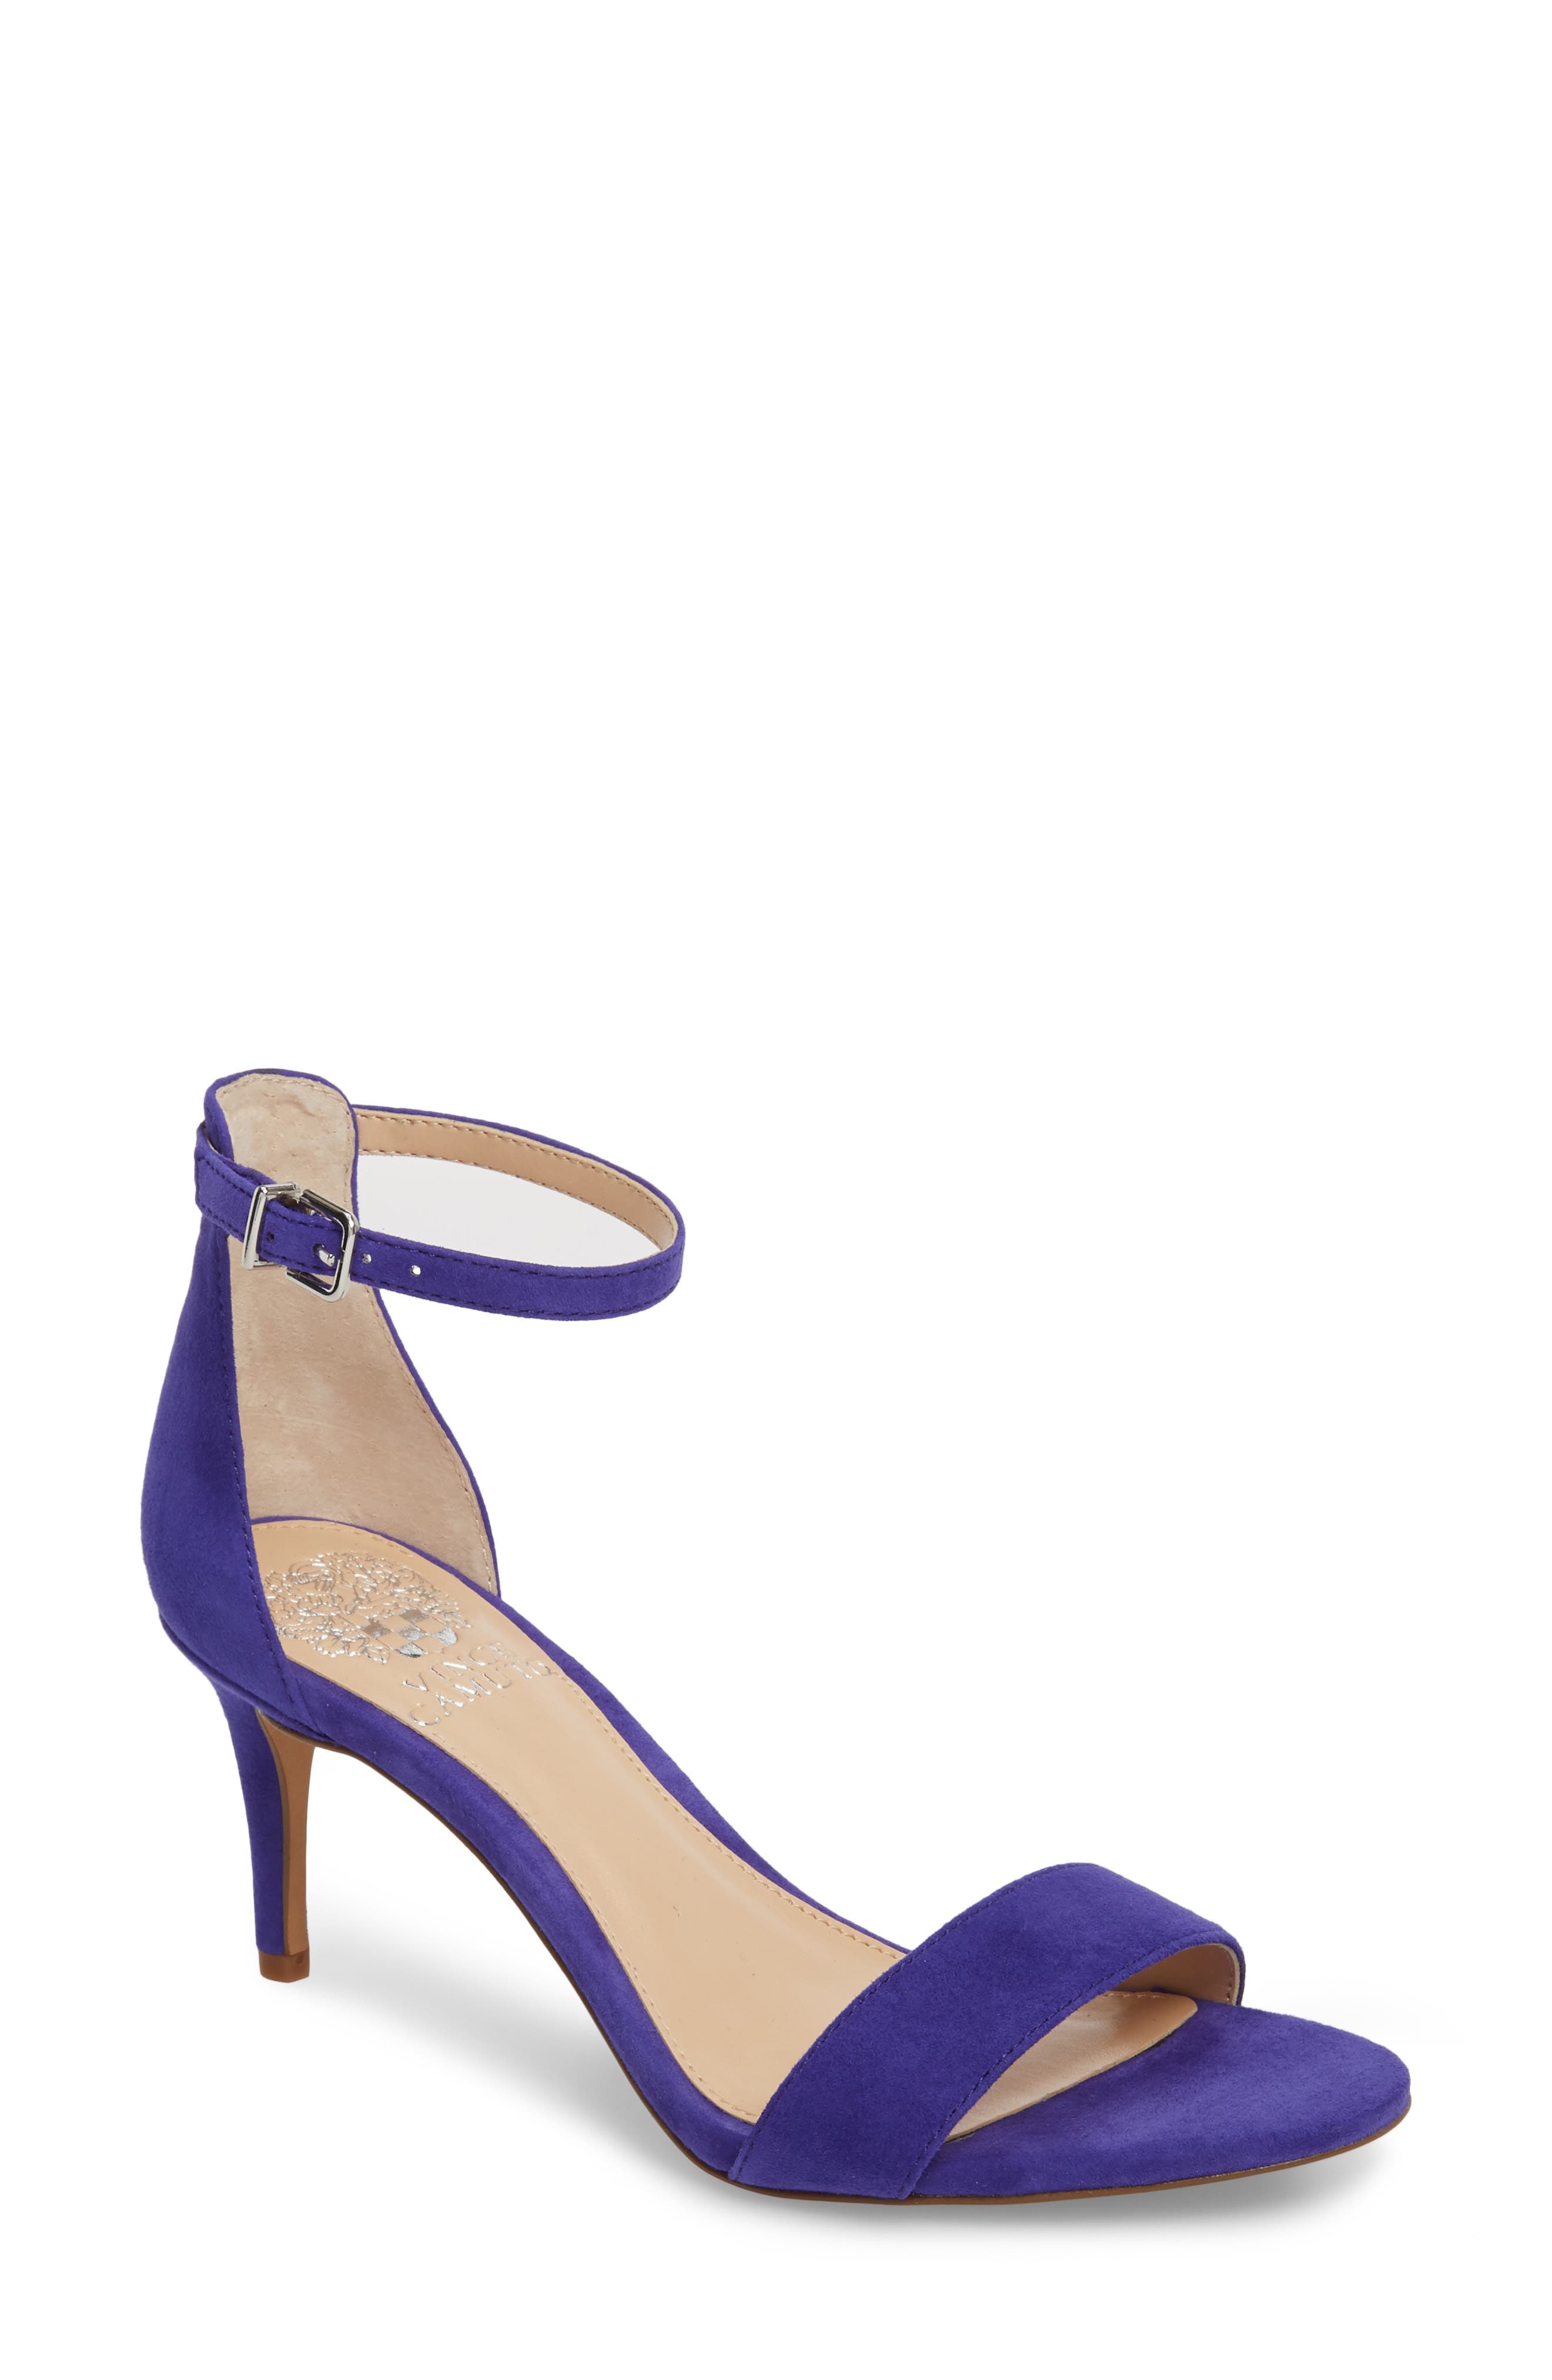 vince camuto purple heels